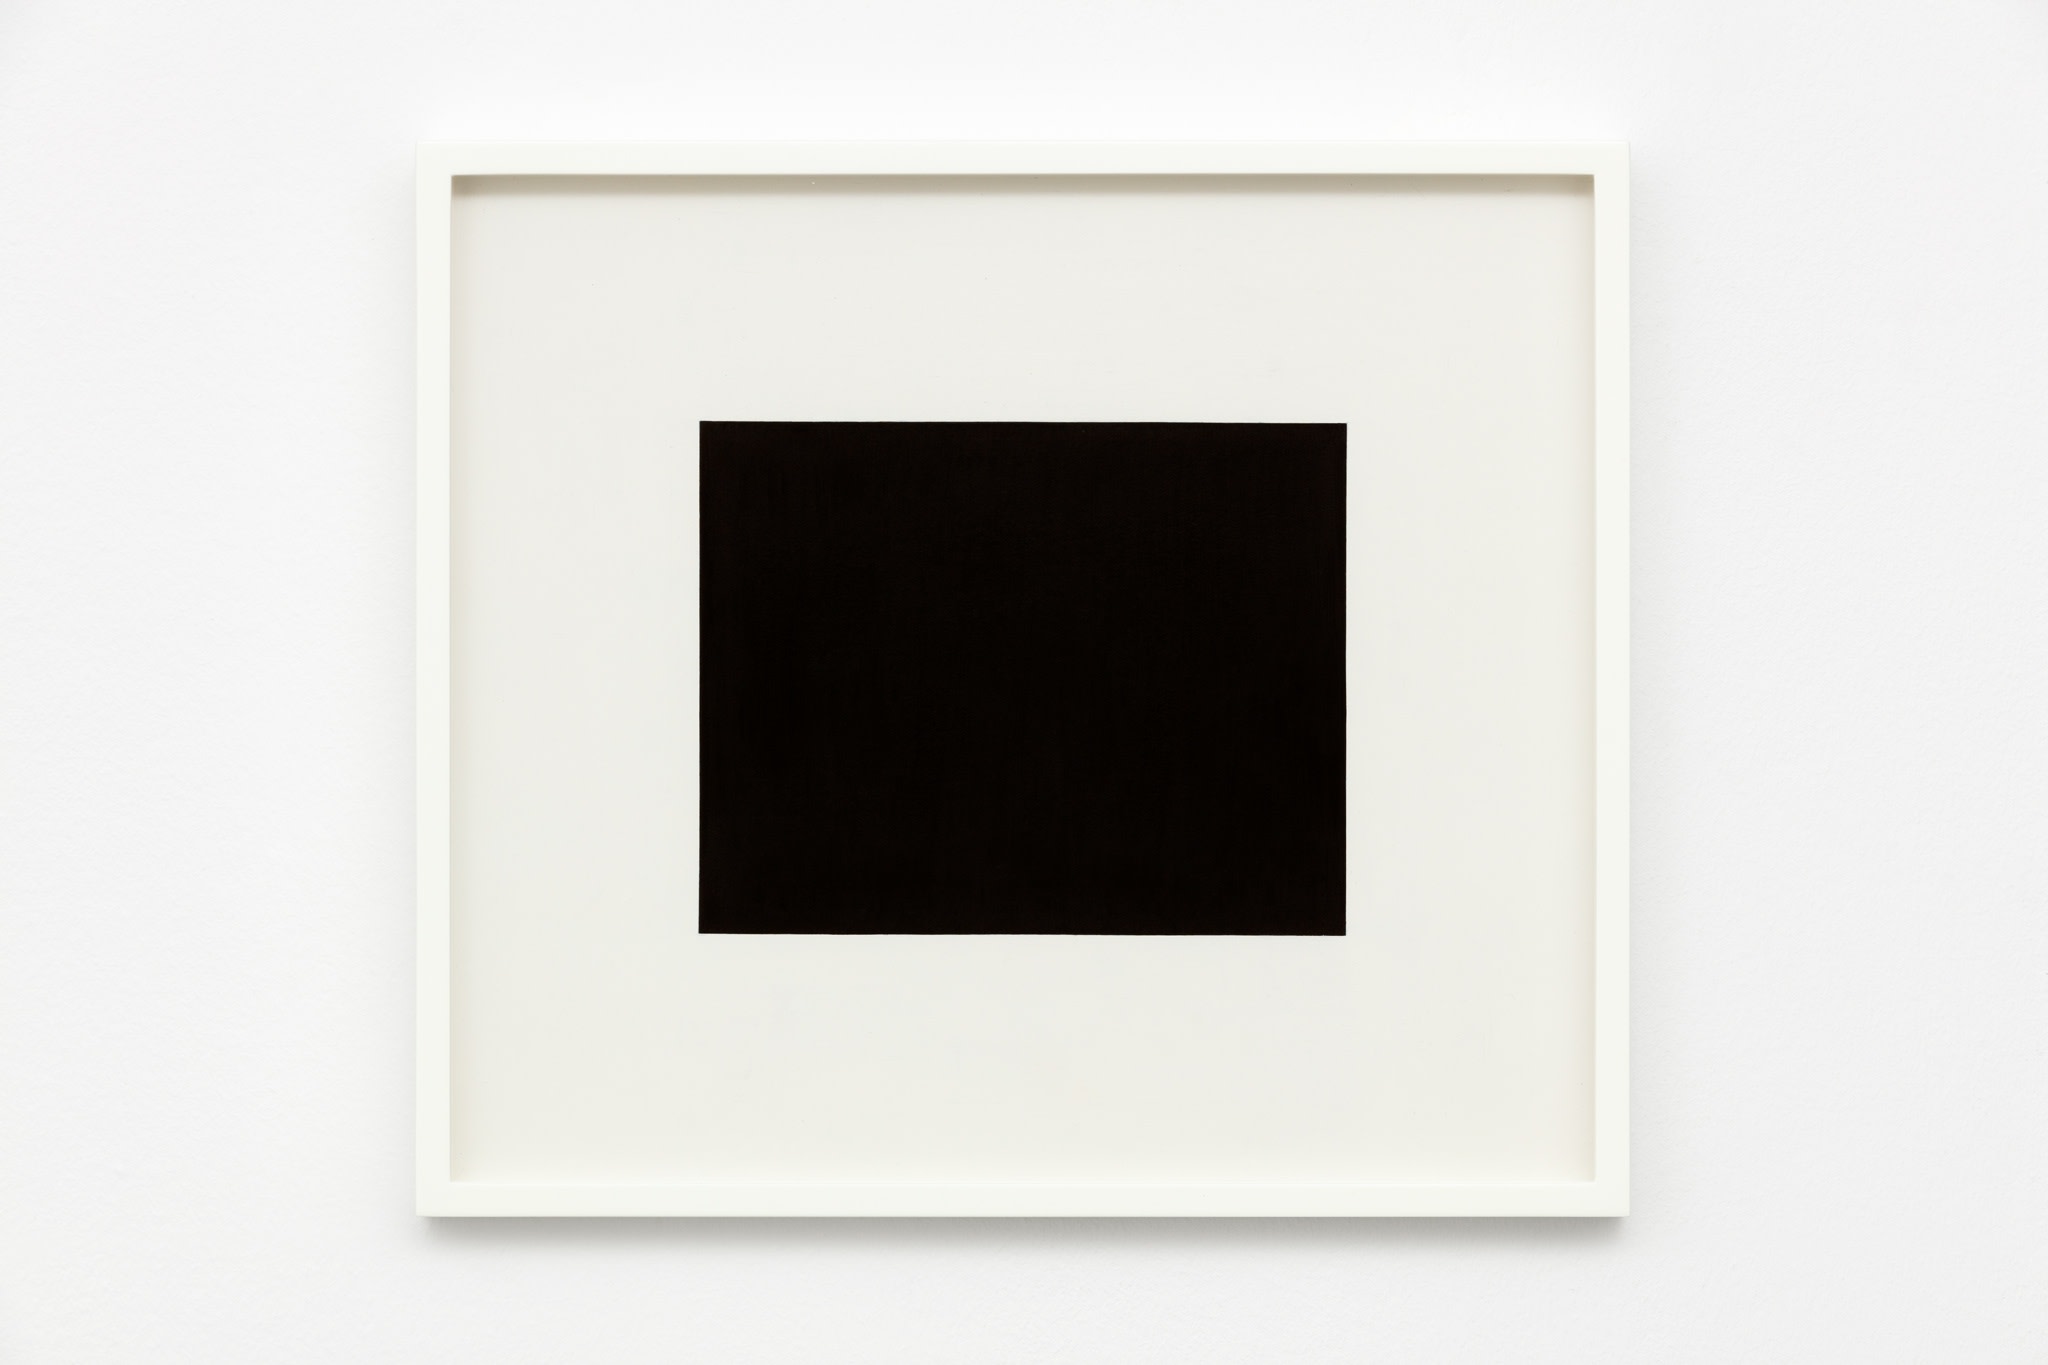 Andrew Grassie, Blank 2, 2020, tempera on paper on board, 14,8 x 18,8 cm (5 1/2 x 7 1/8 in) (image), 31,1 x 35,2 x 3 cm (12 1/4 x 13 3/4 x 1 1/8 in) (framed). Photo © Andrea Rossetti